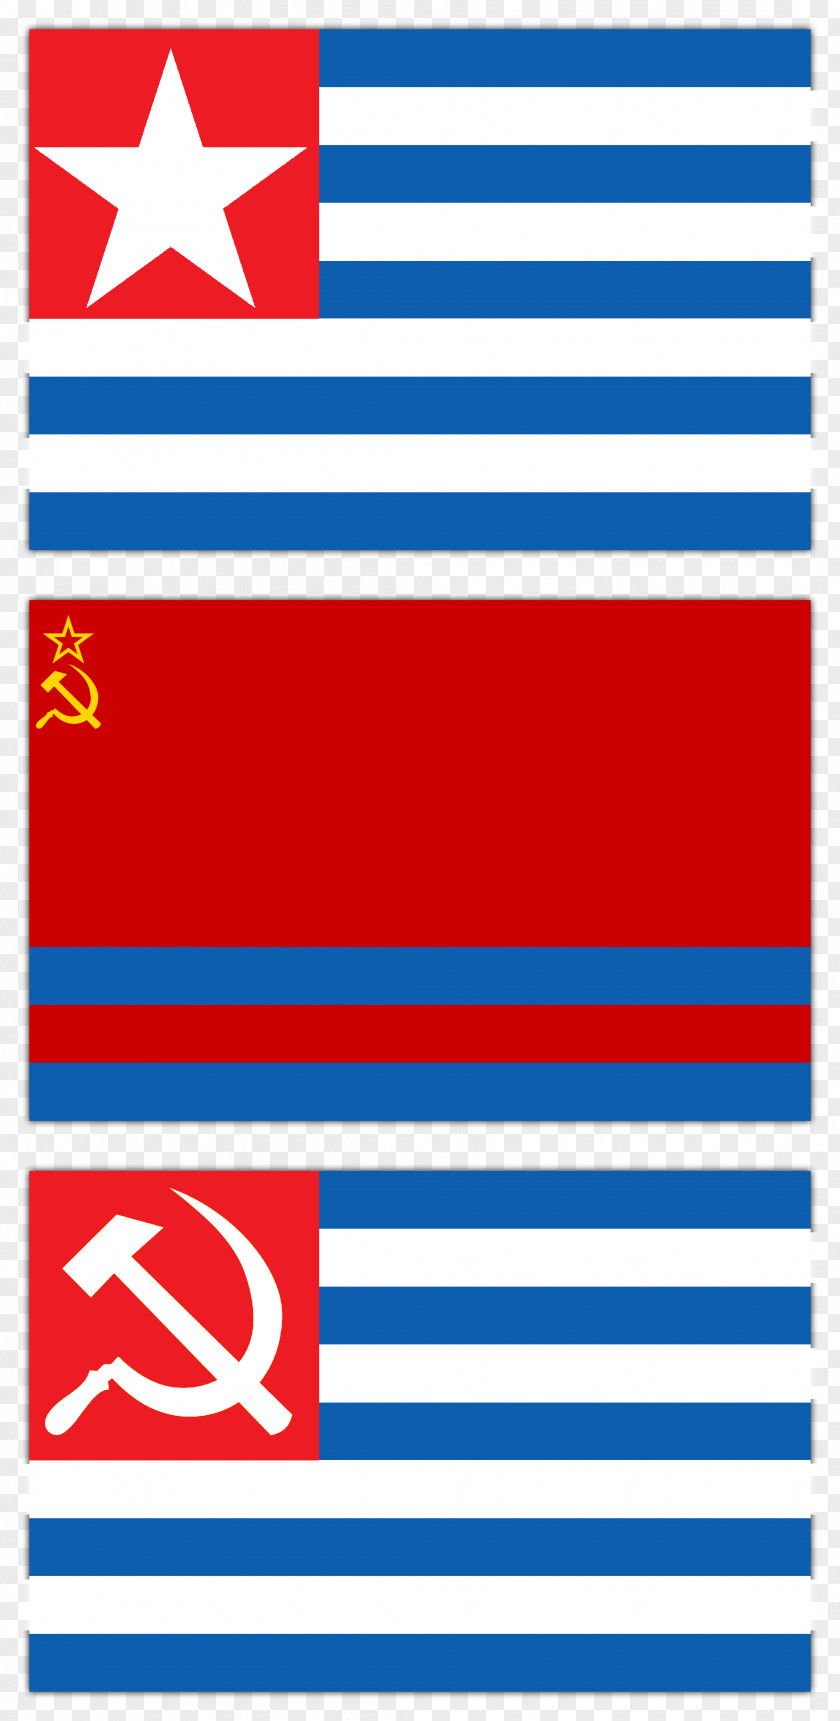 Greece Greek Civil War Flag Republics Of The Soviet Union Communism PNG